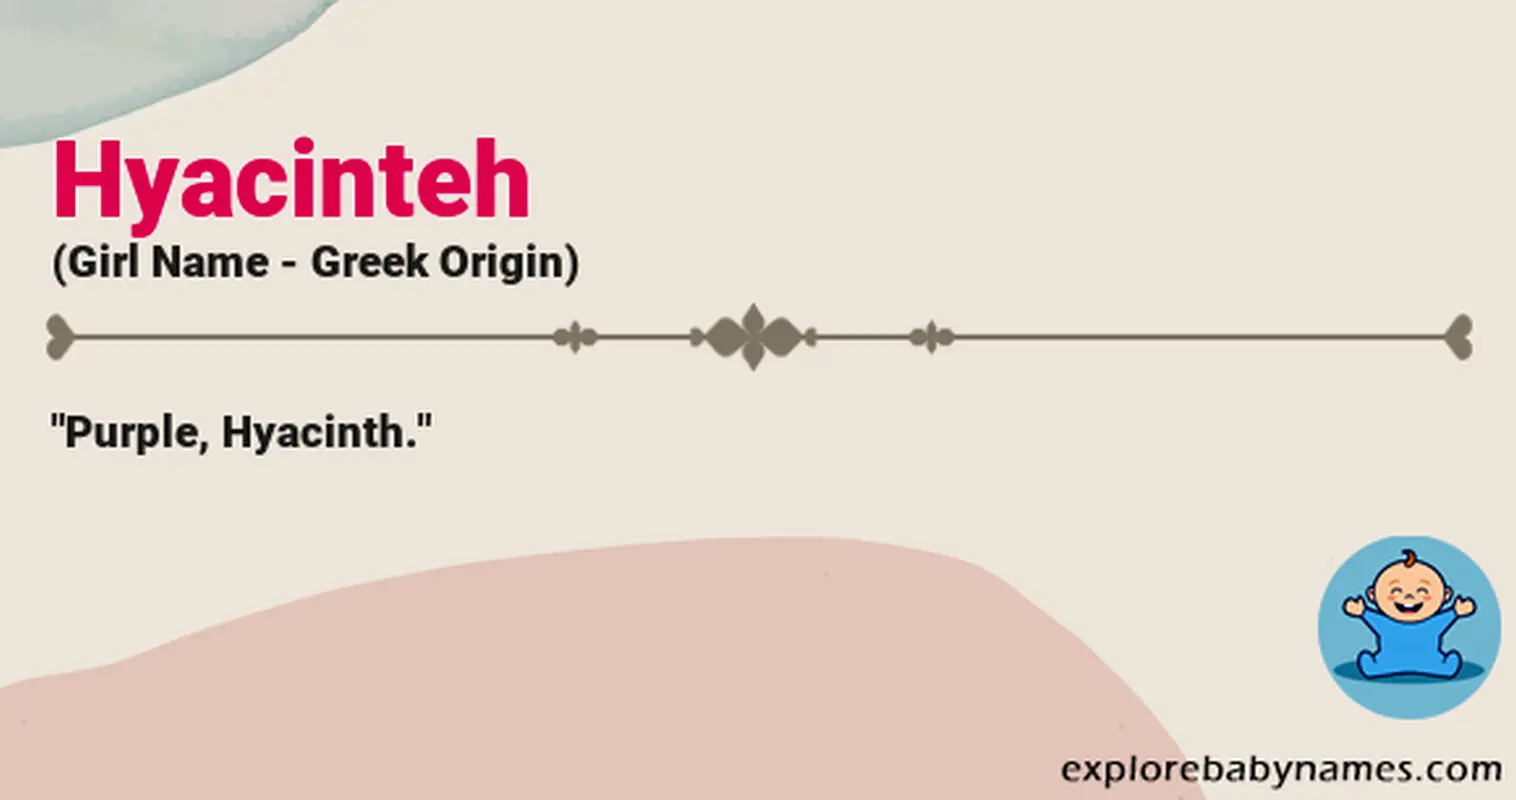 Meaning of Hyacinteh